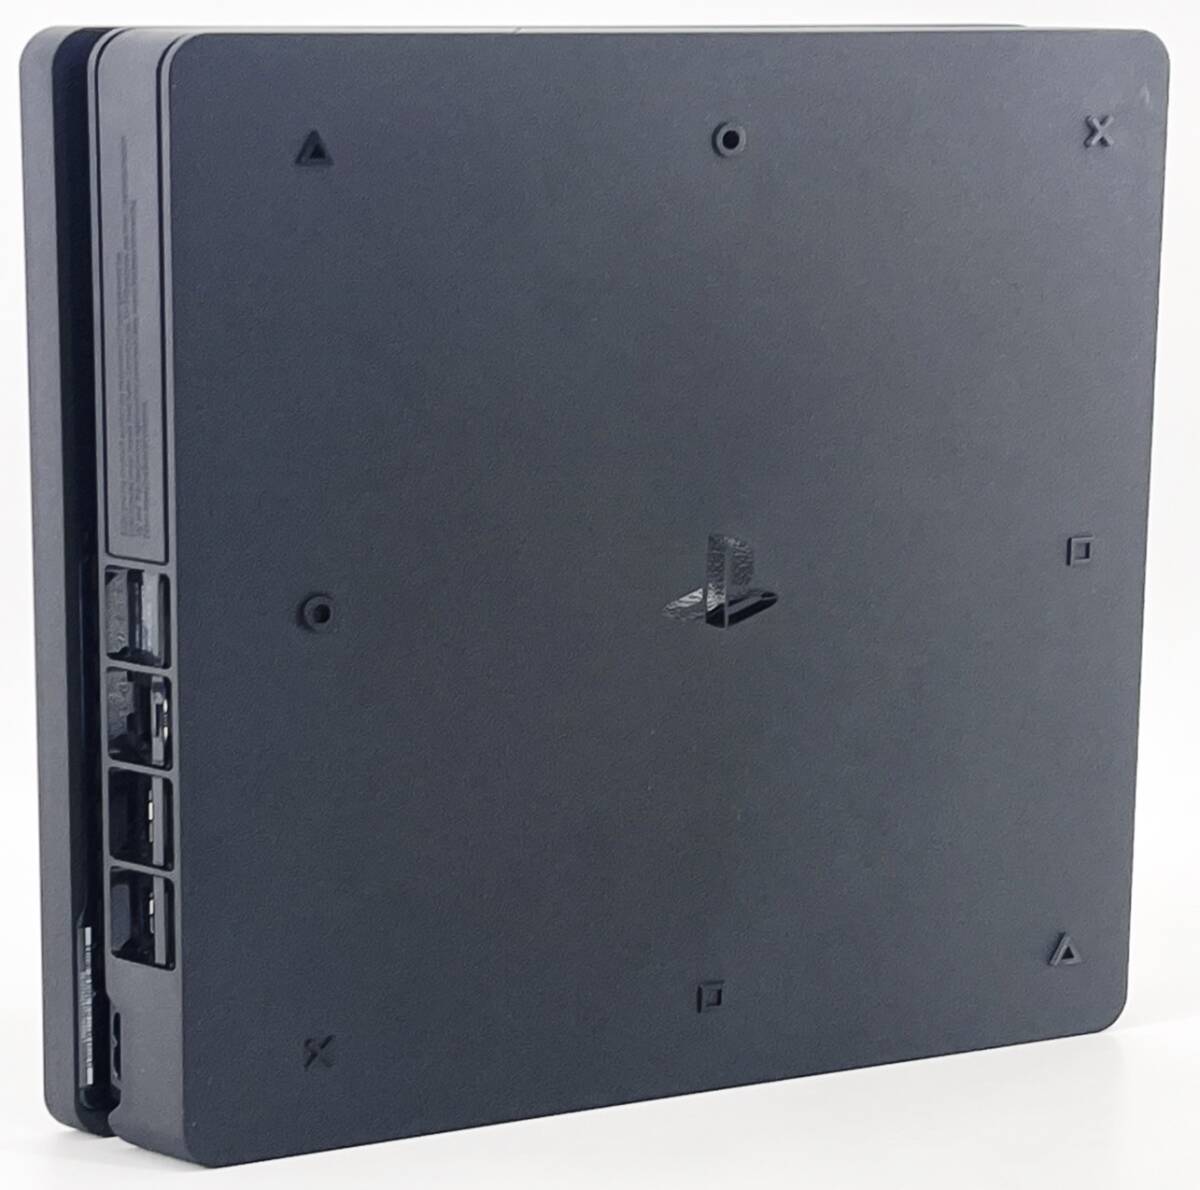 1 jpy start used game machine Playstation4 500GB CUH-2000AB01 jet * black PlayStation PS4 PlayStation 